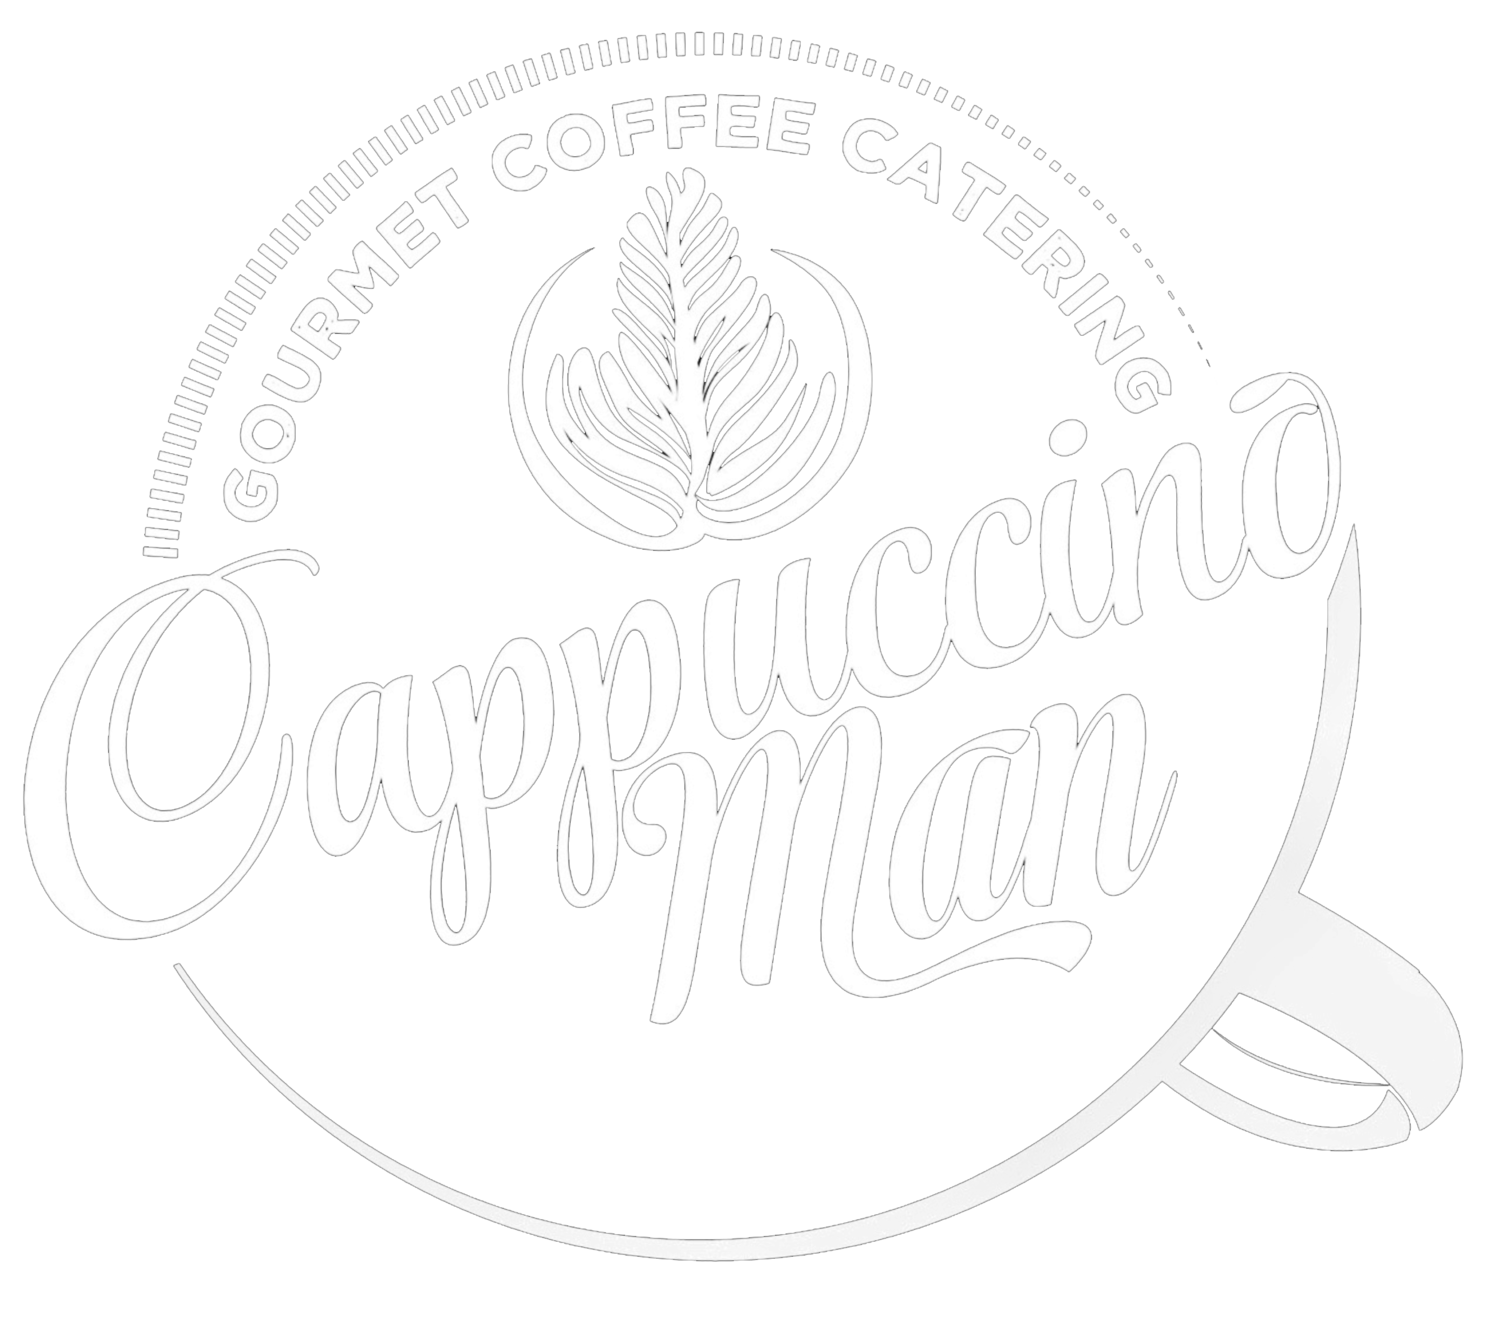  Cappuccino Man